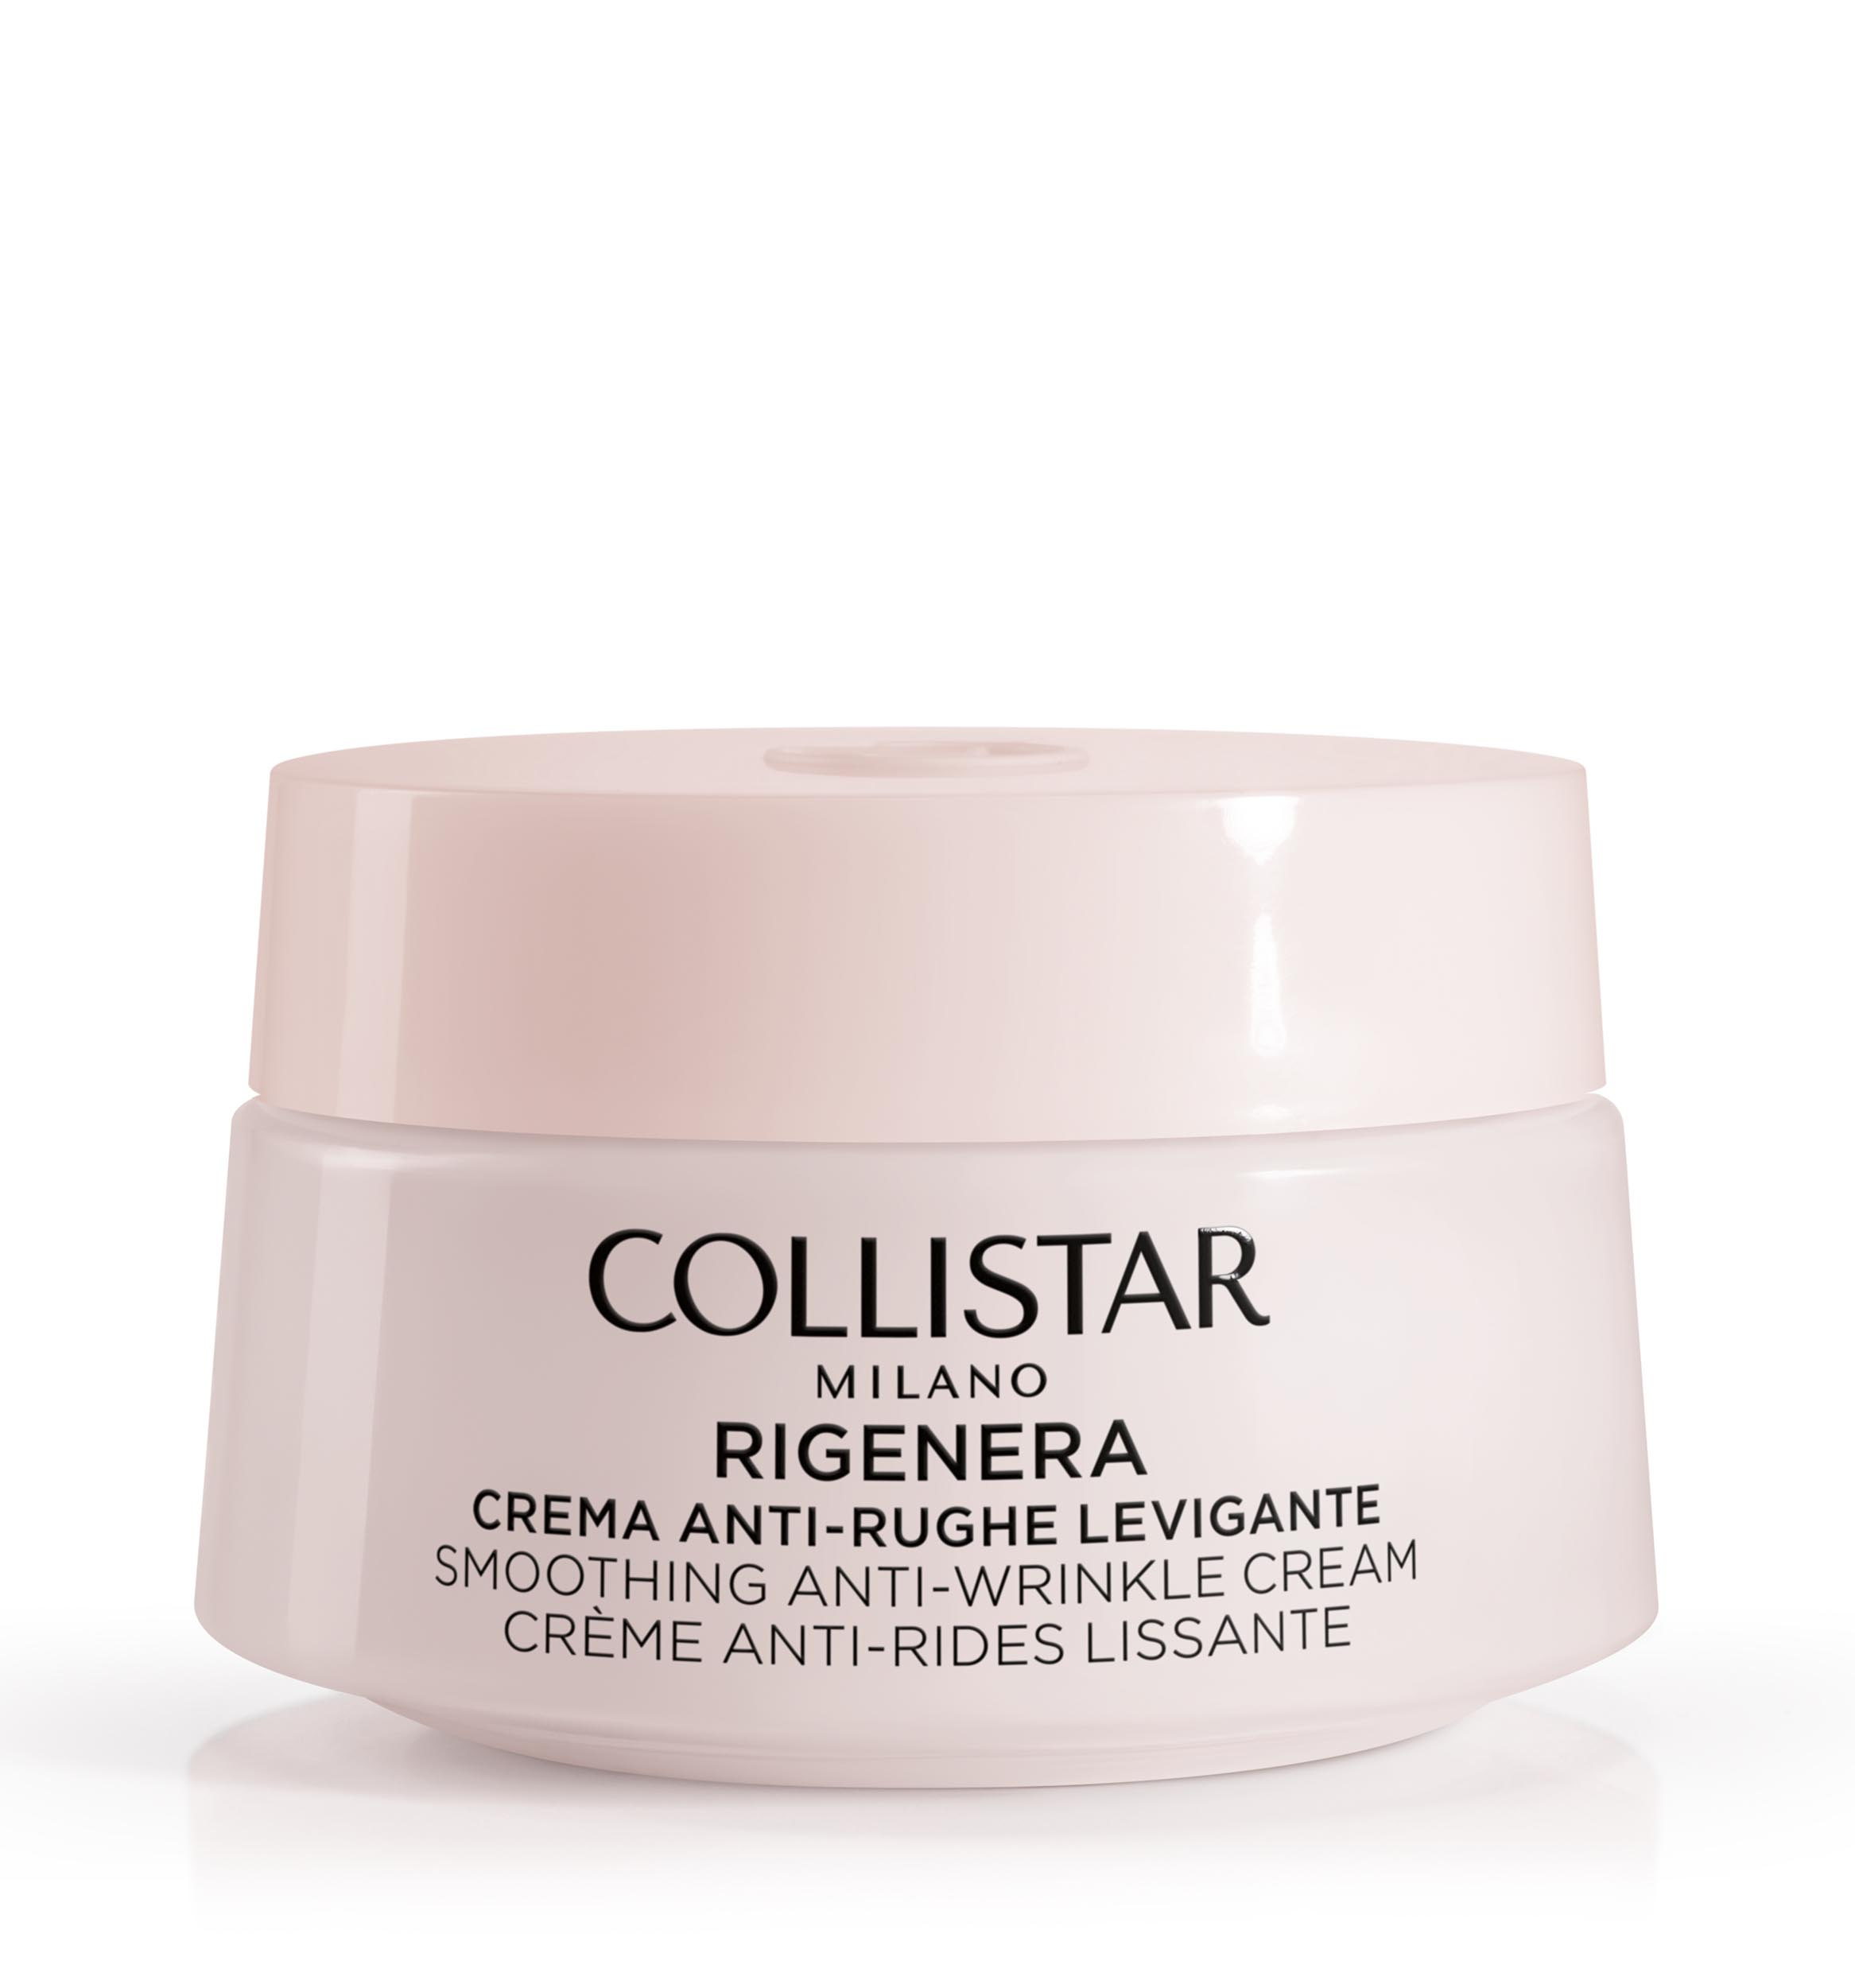 Collistar Rigenera Smoothing Anti-wrinkle Cream